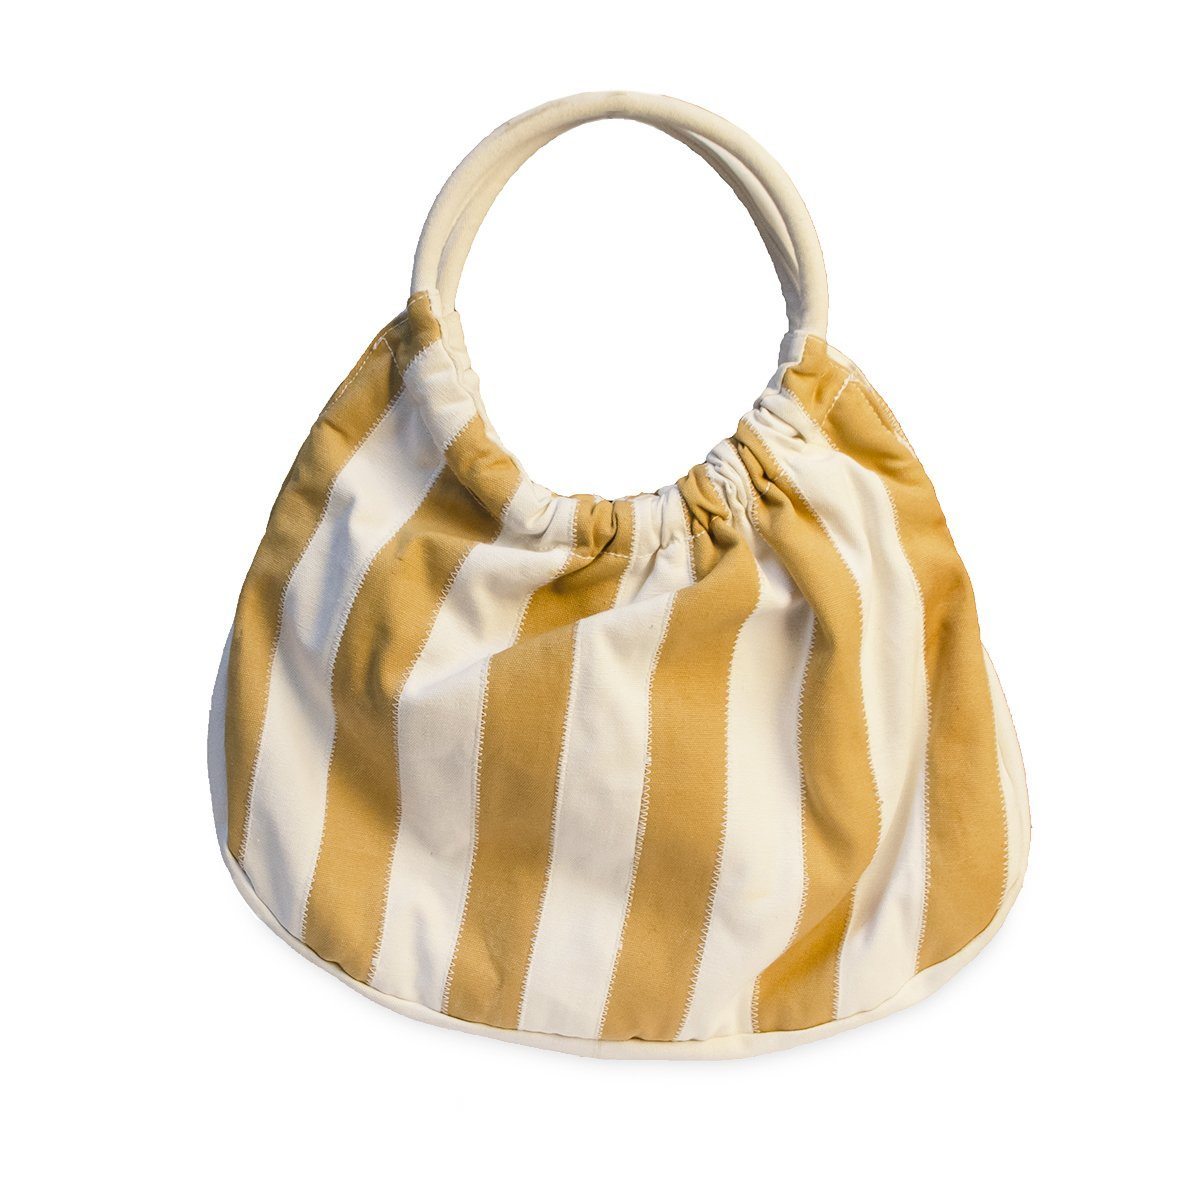 Vintage Striped Canvas Tote Handbag, Gold & Cream Stripes